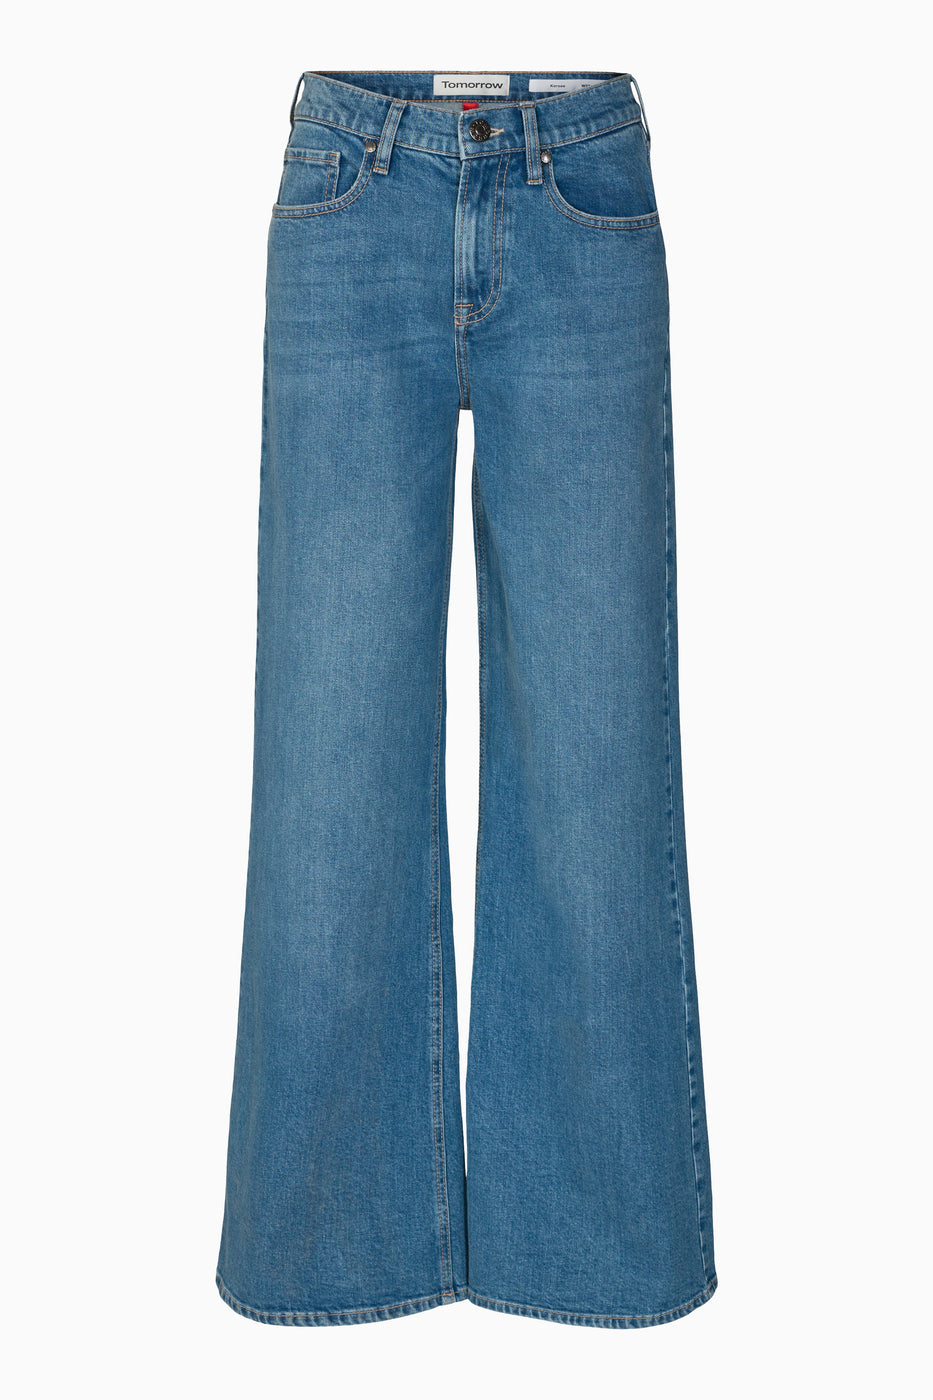 Tomorrow TD Kersee Jeans Wash Hong Kong Jeans & Pants 51 Denim Blue